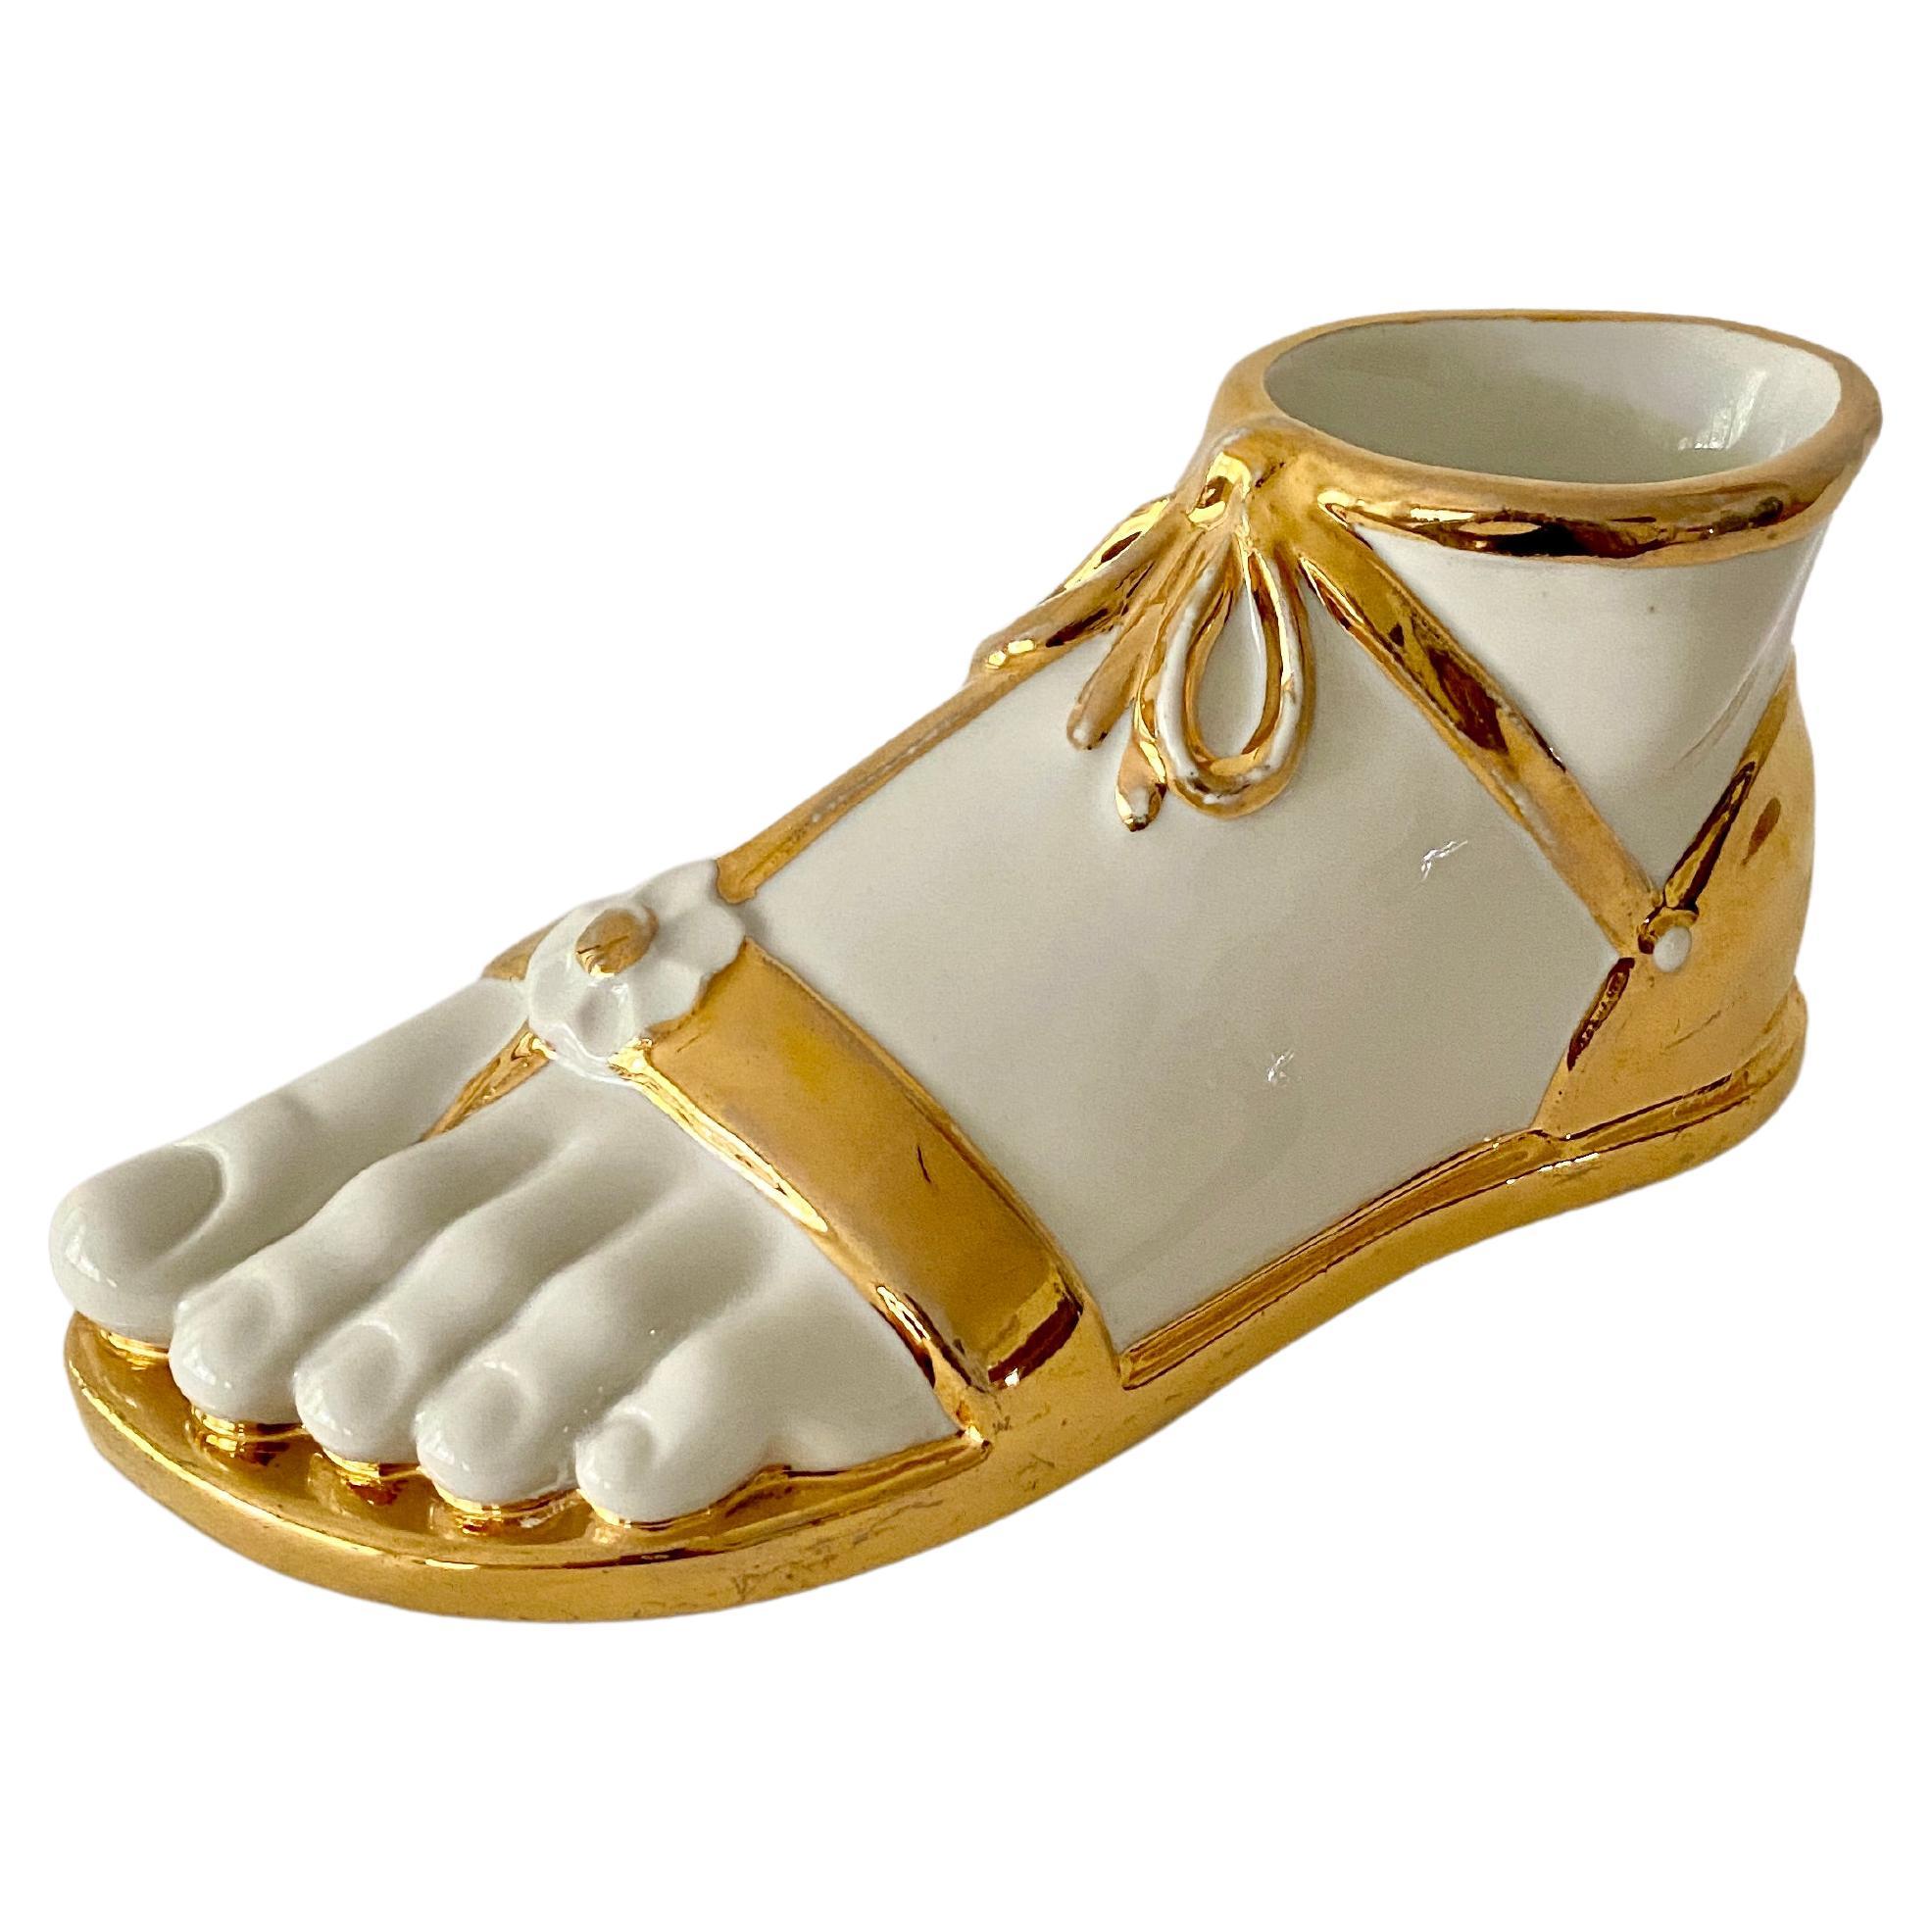 White and Gold "Piede Romano" Roman Left Foot by Piero Fornasetti For Sale